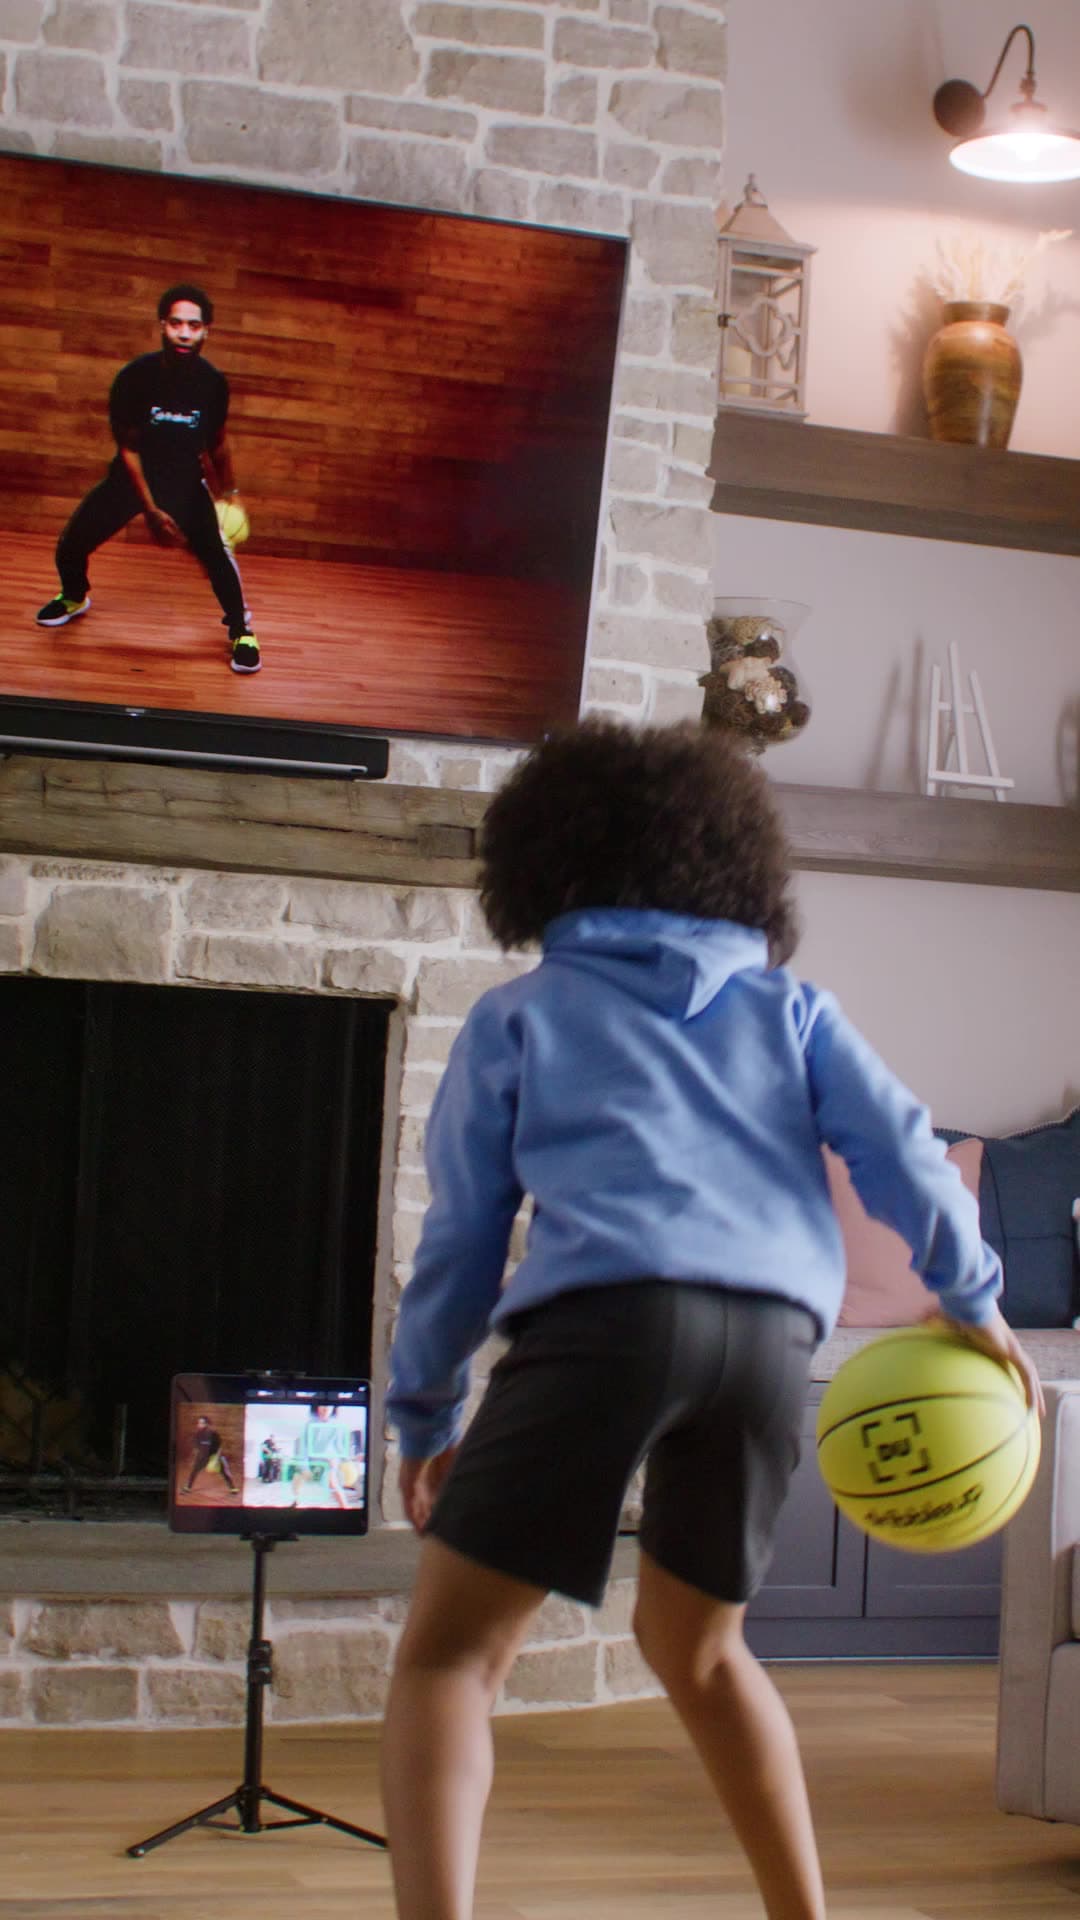 Smart Basketball Live Action Video Thumbnail